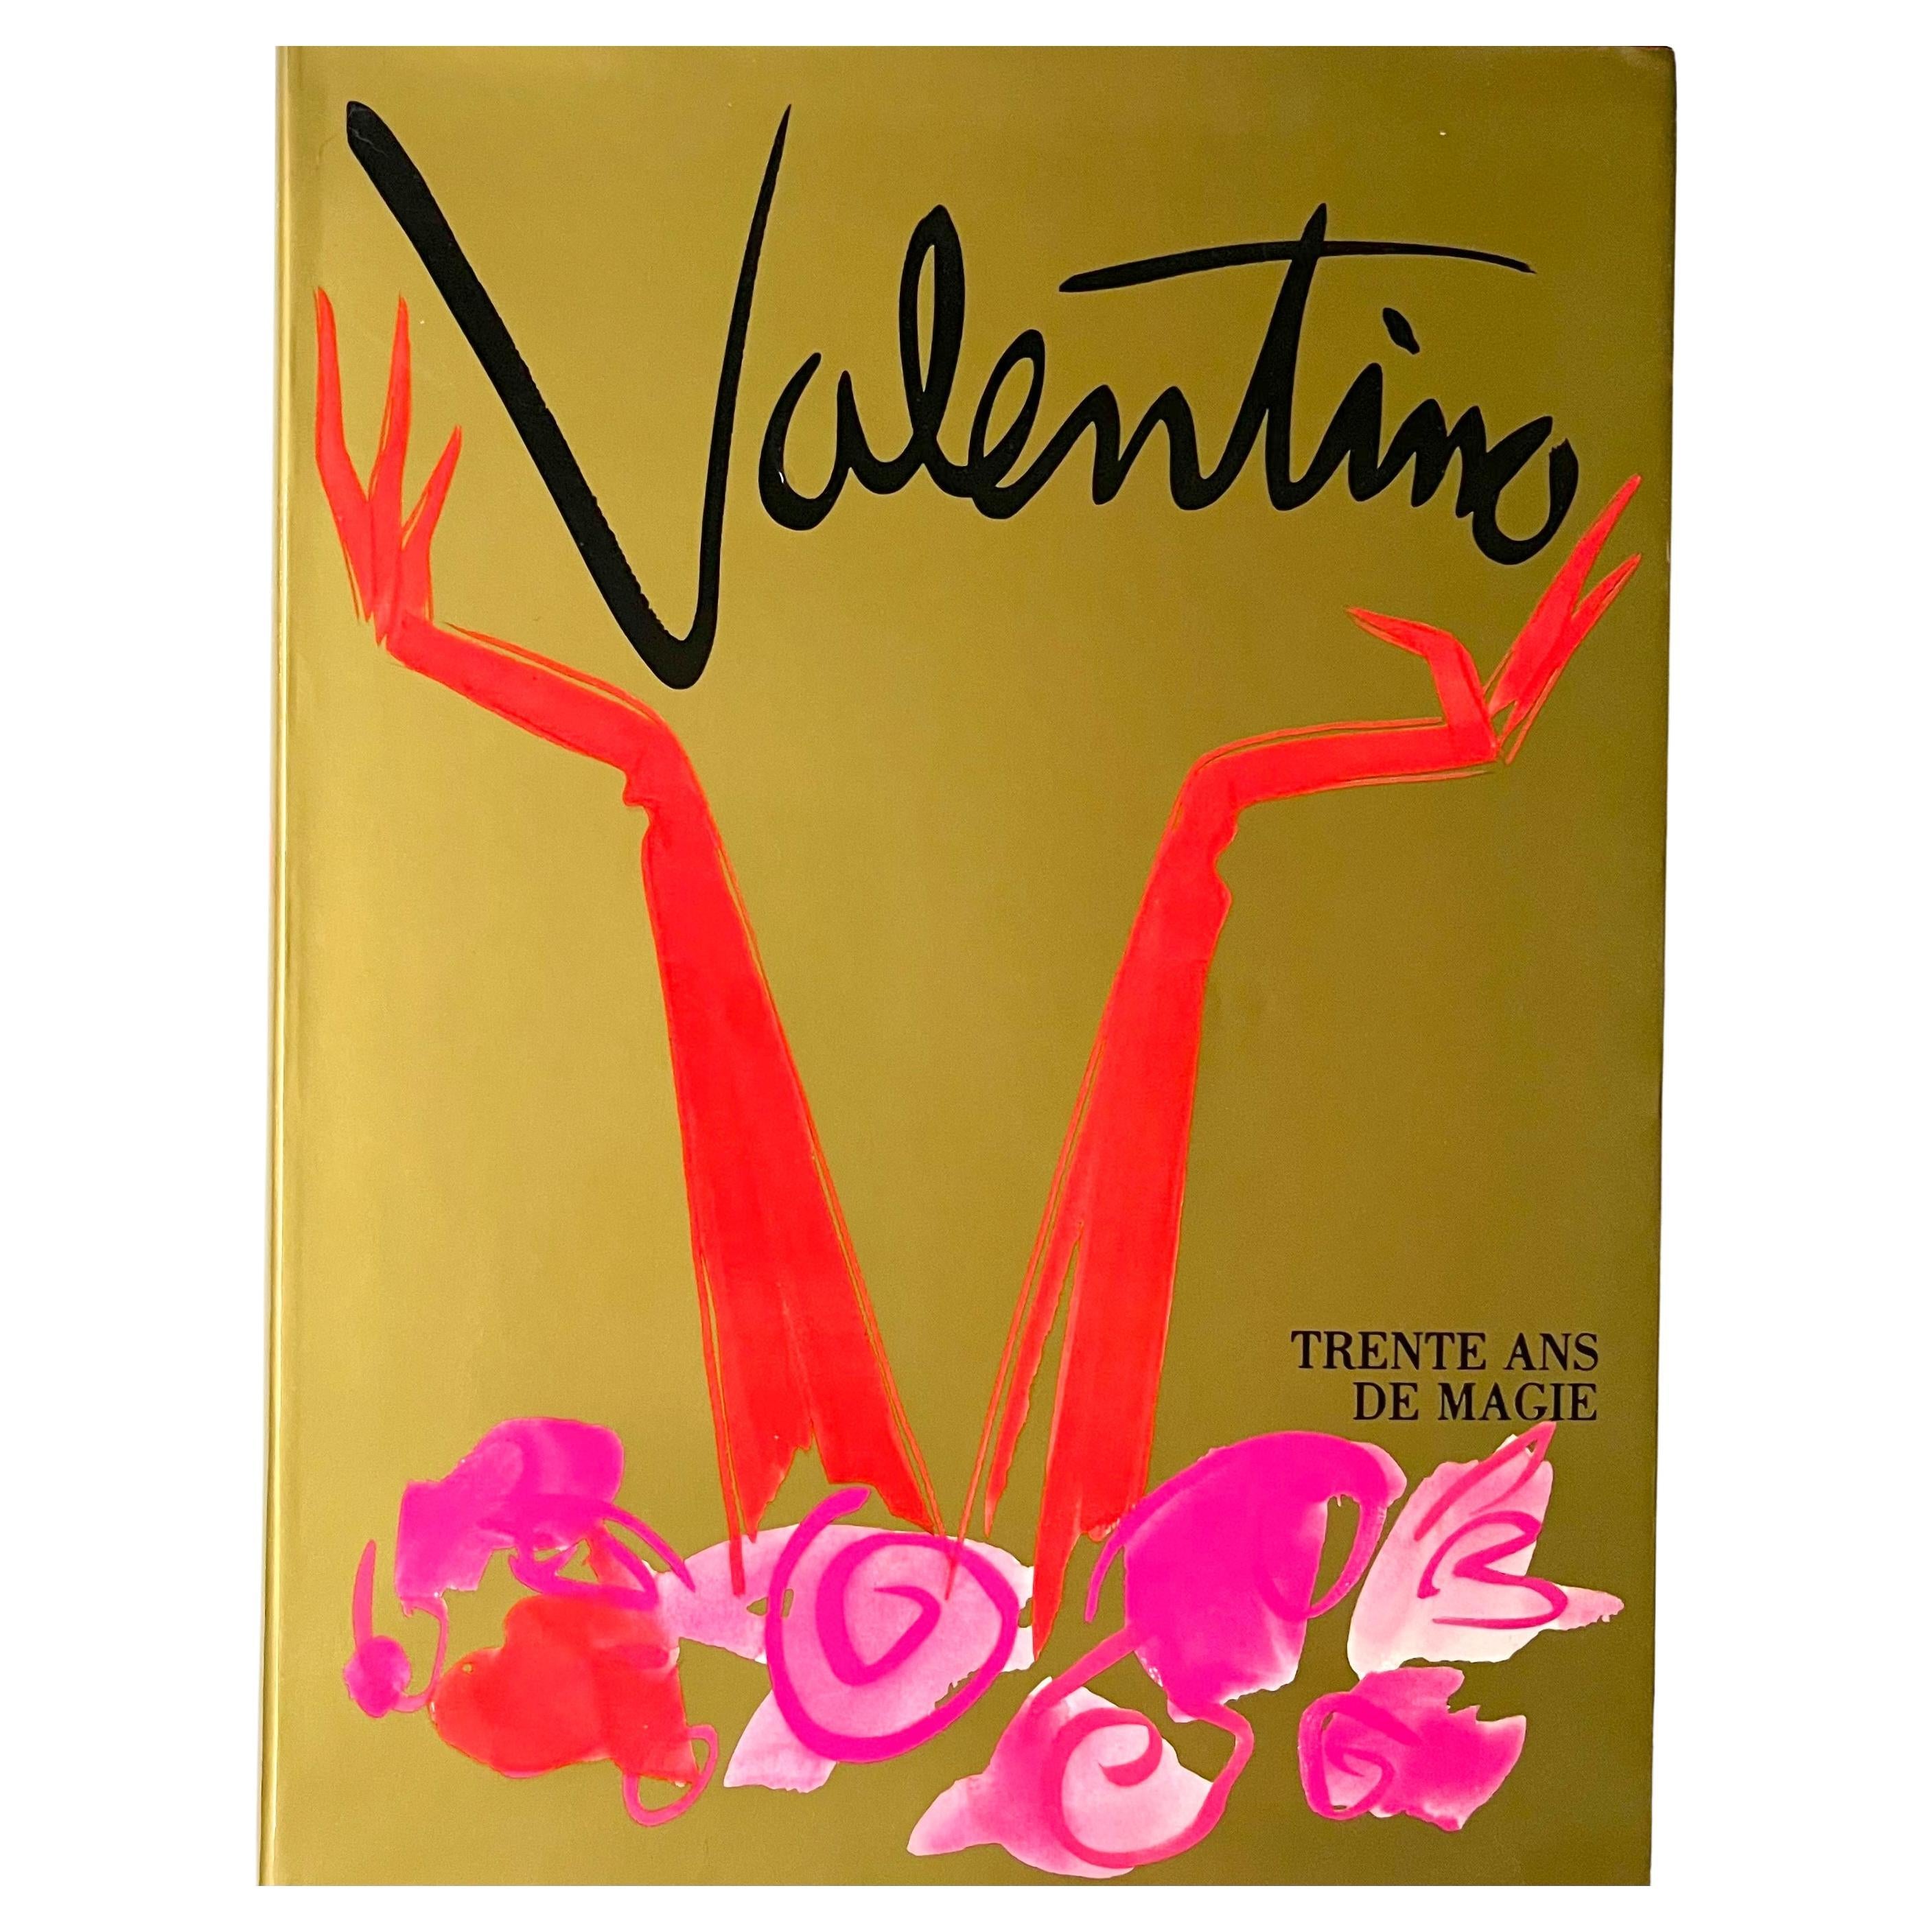 Valentino Trente Ans de Magie 1st French Edition 1991